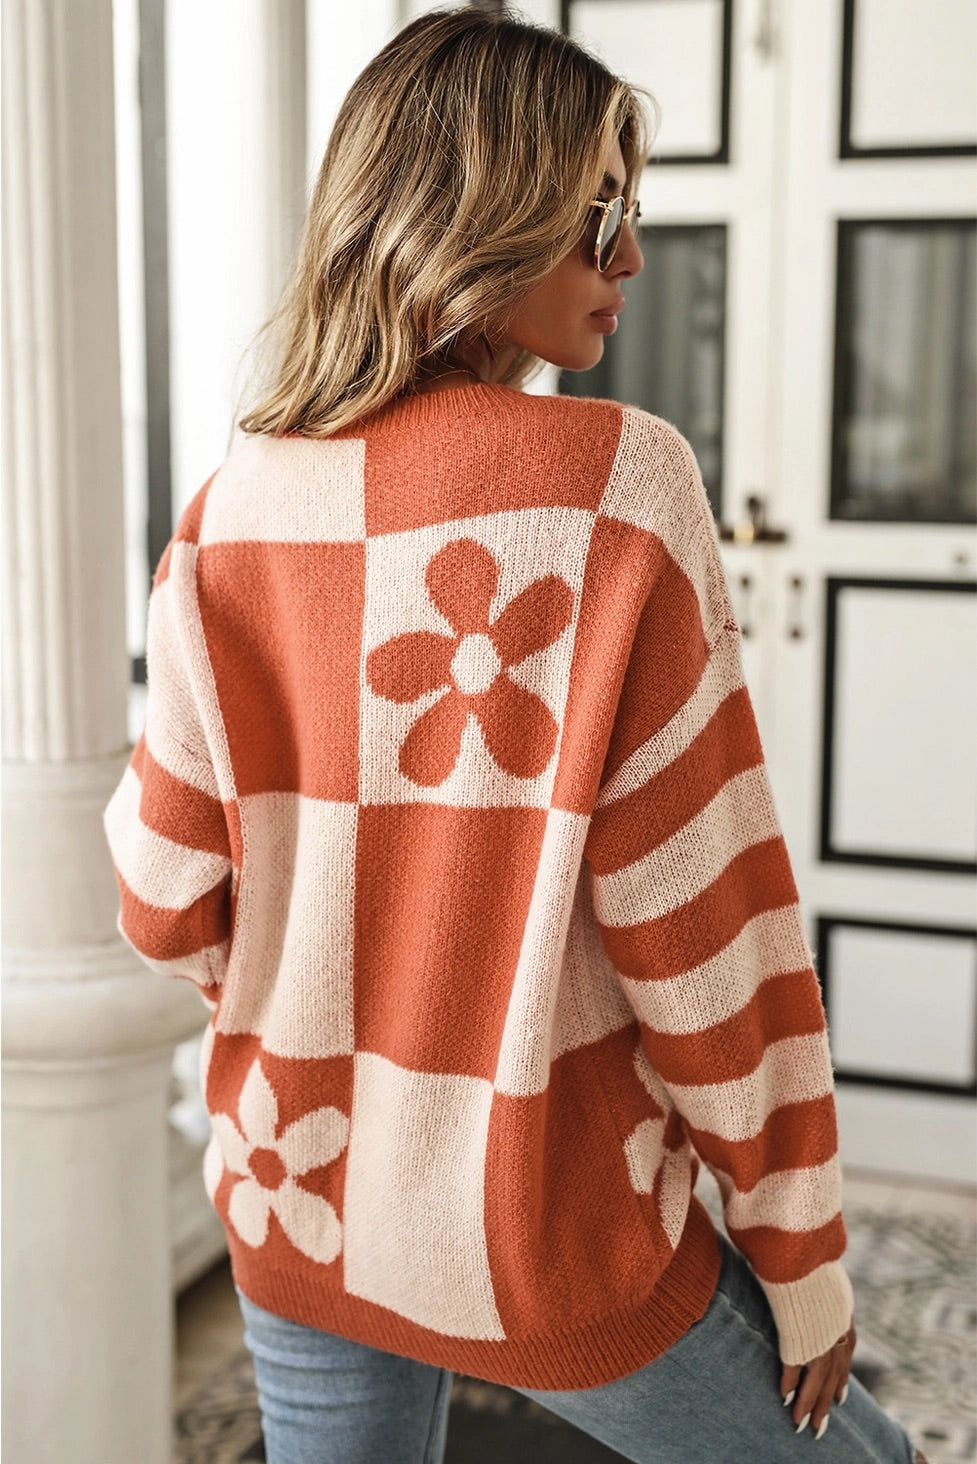 Checkered Floral Print Striped Sleeve Sweater Women's, Crew Neck (Orange/Brown)